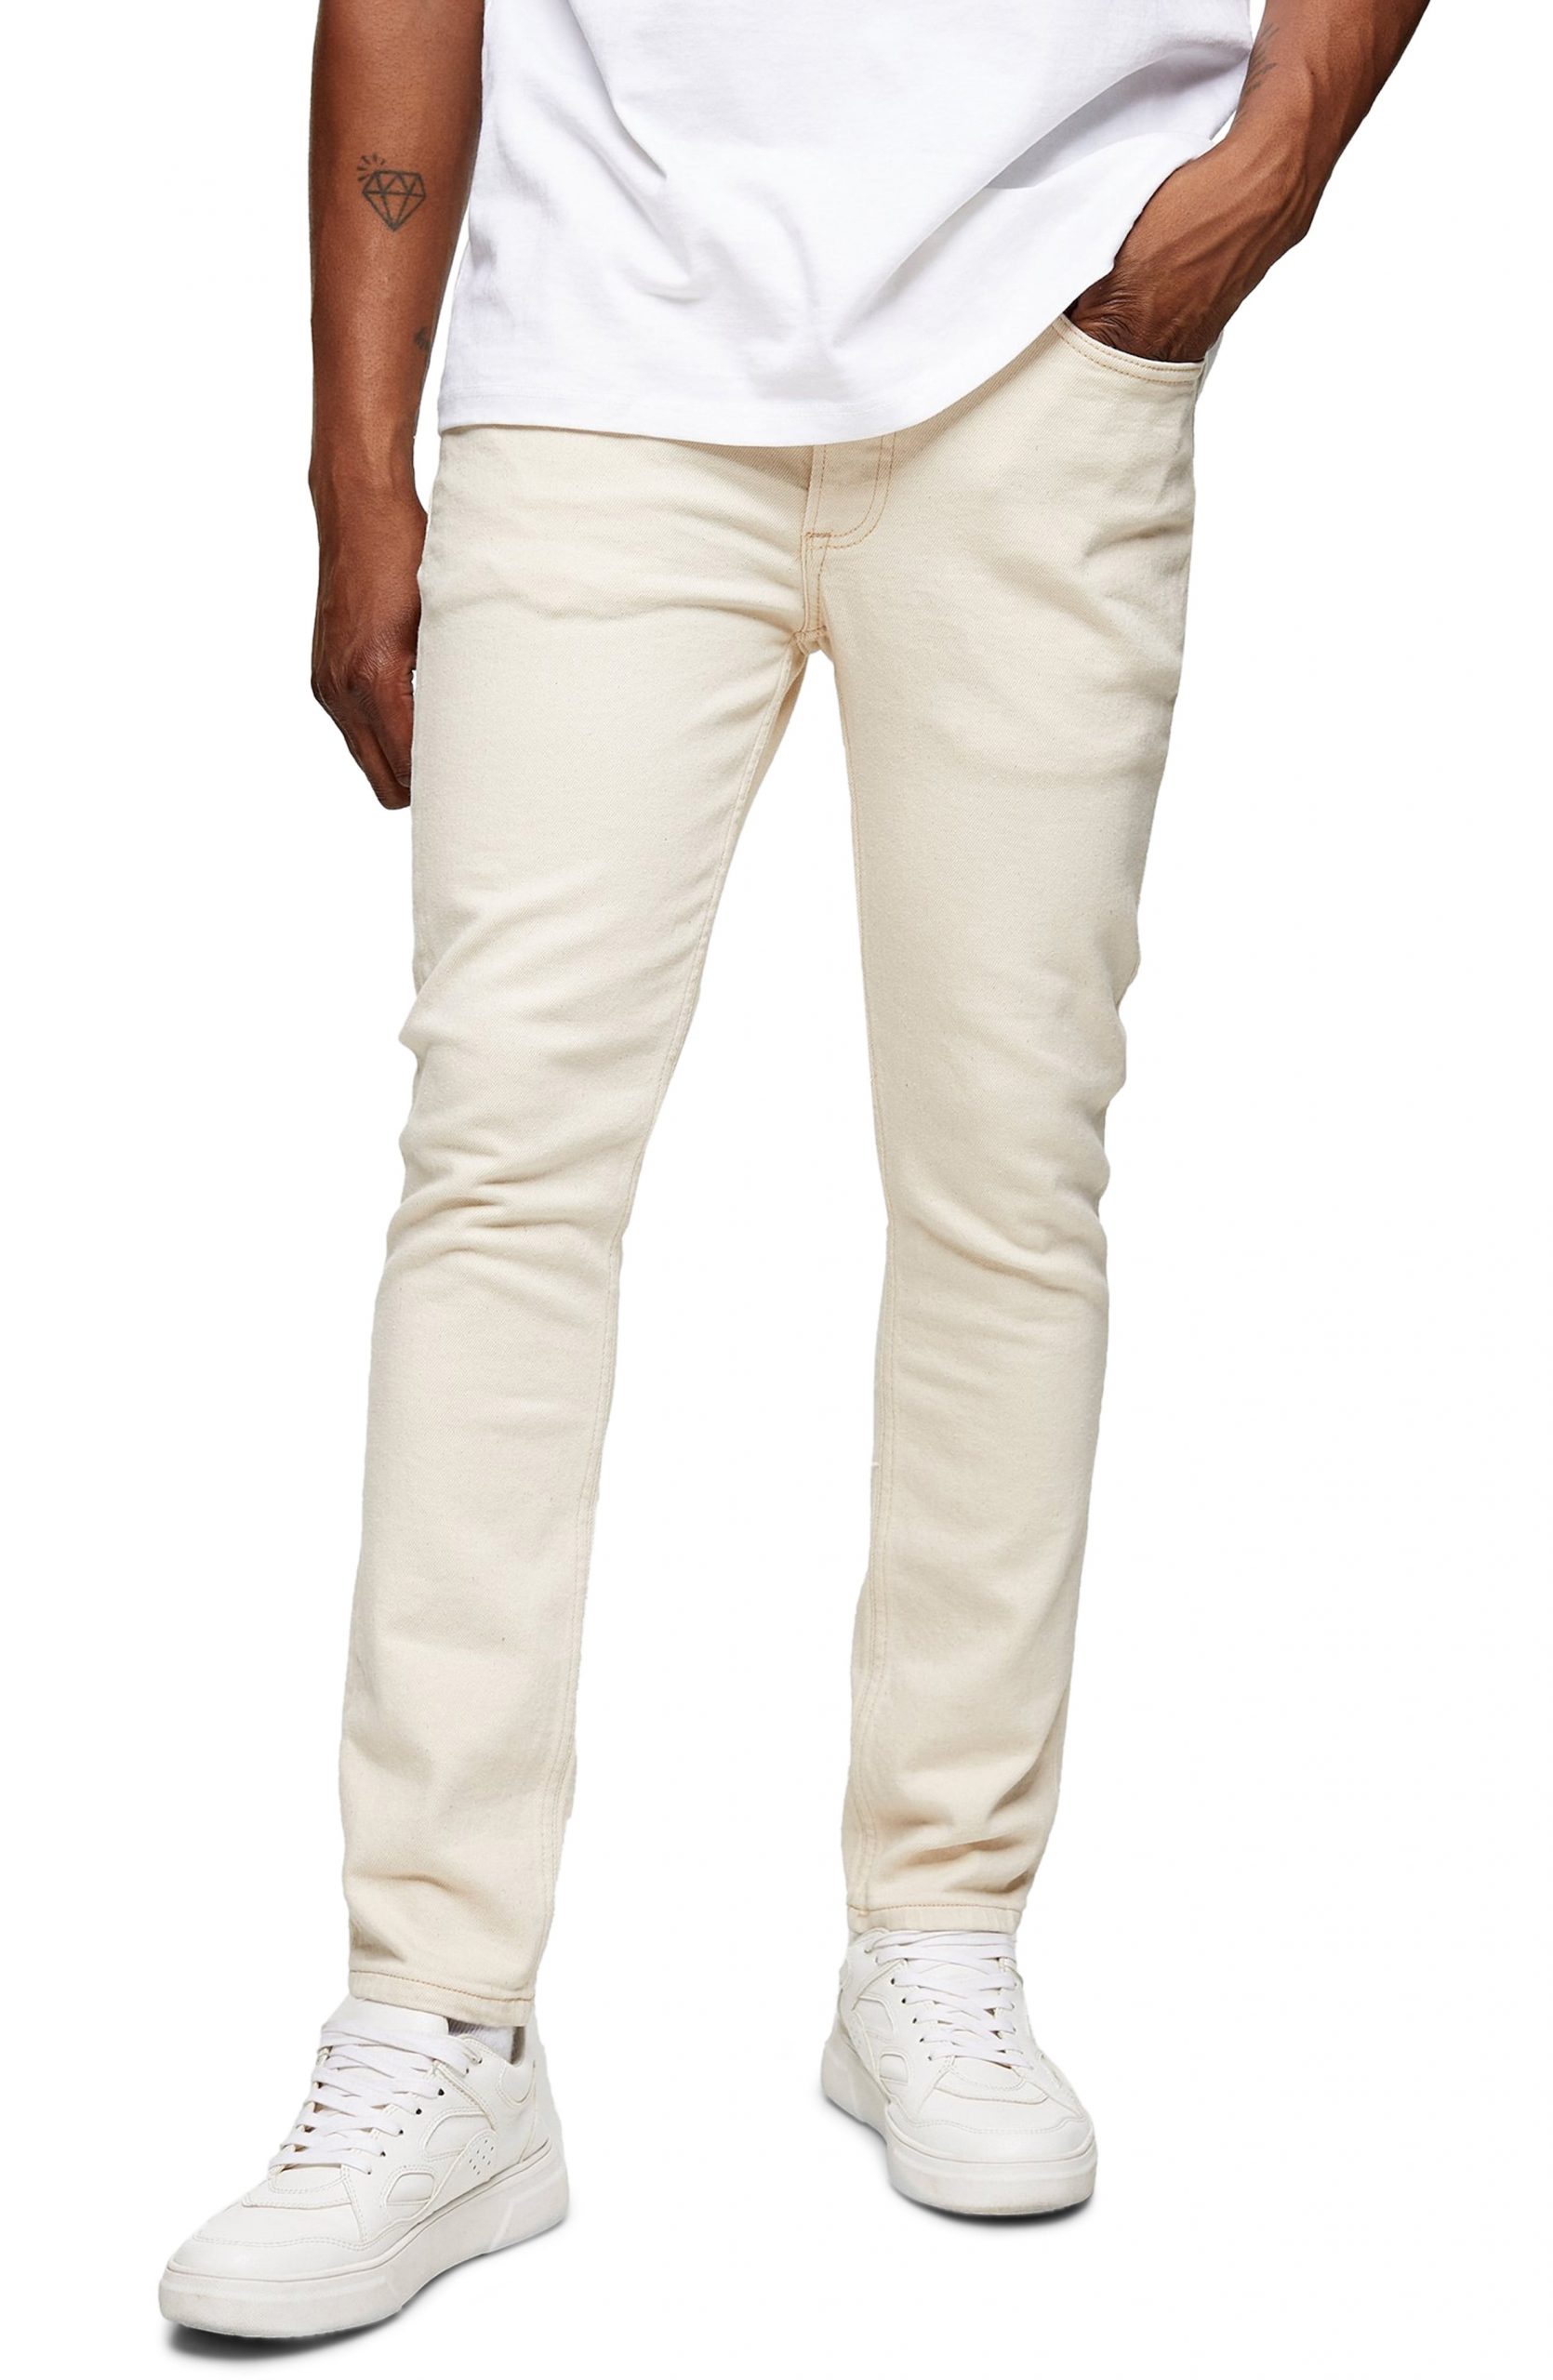 Men’s Topman Skinny Fit Jeans, Size 34 x 34 - Beige | The Fashionisto